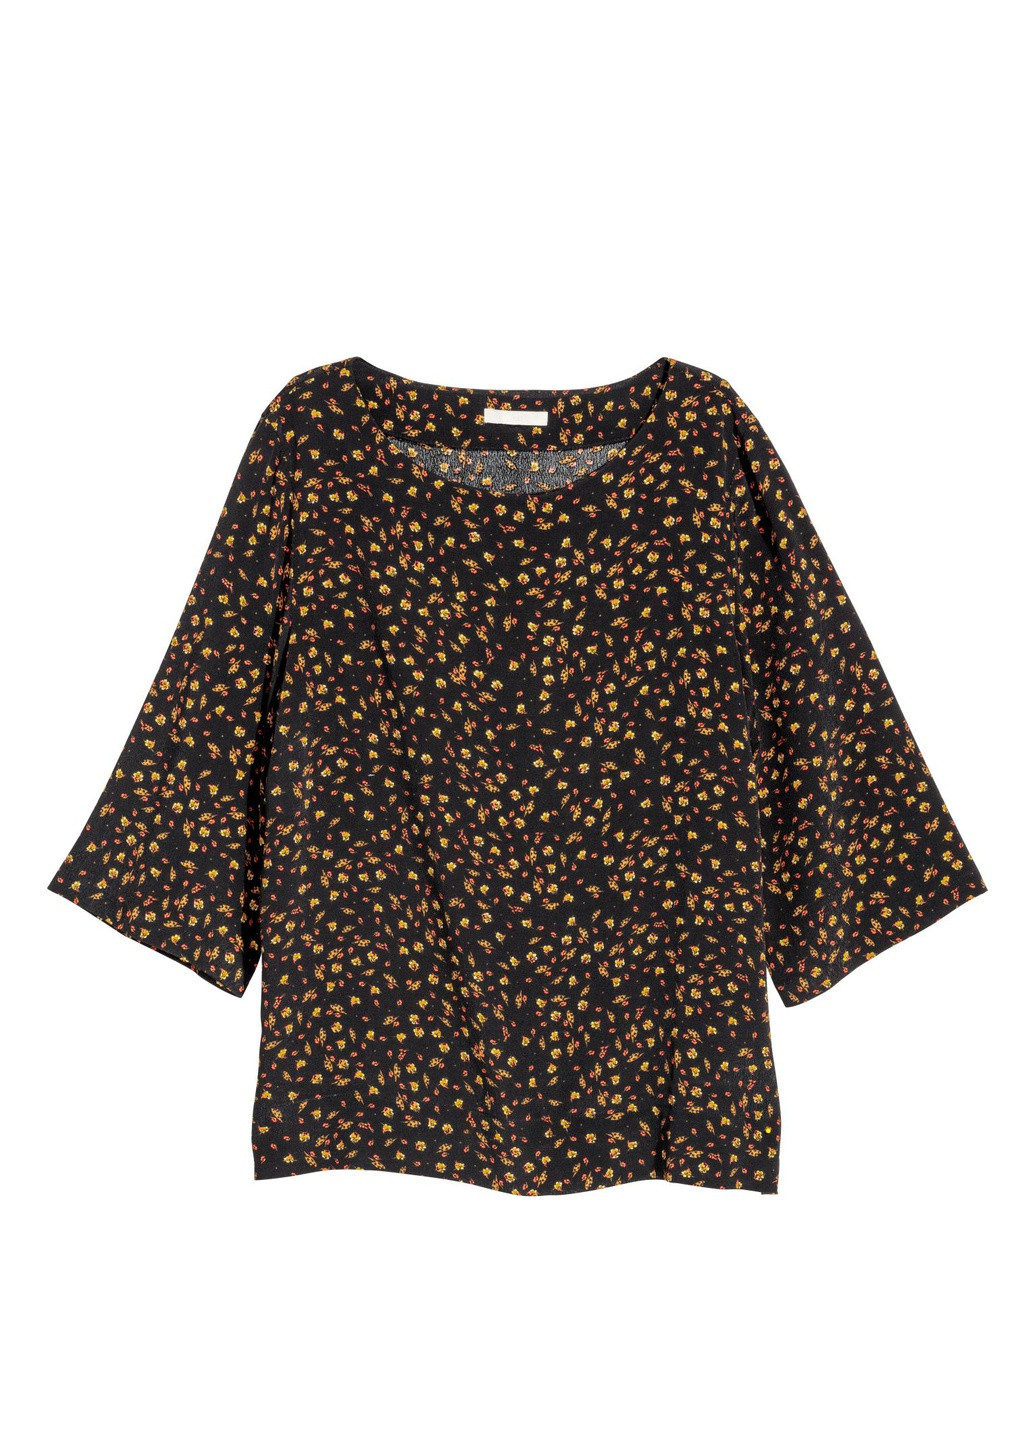 Черная летняя блузка с коротким рукавом H&M